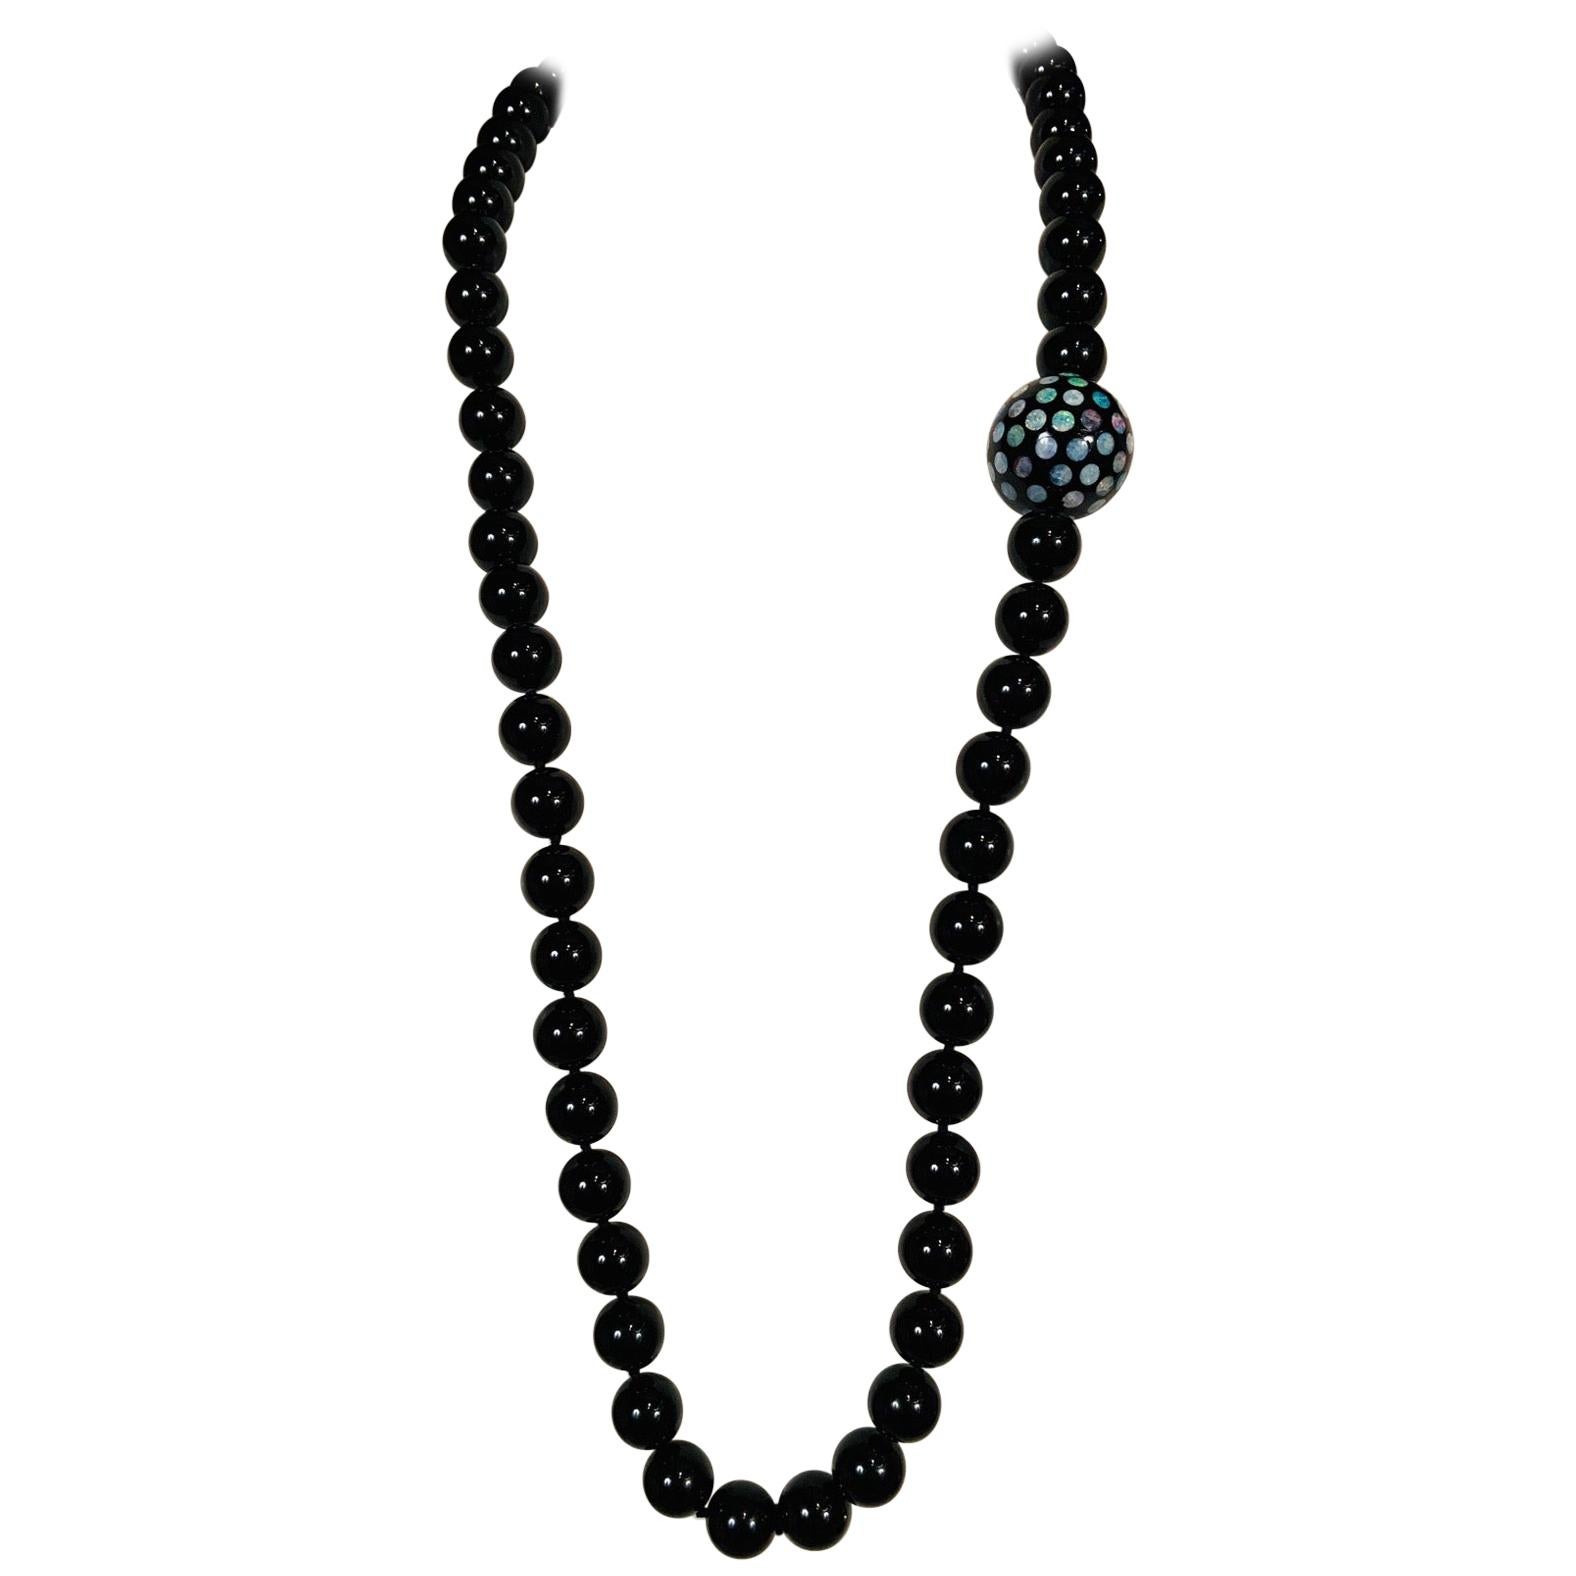 Onyx Bead Necklace Featuring an Australian Opal Studded Large Onyx Bead